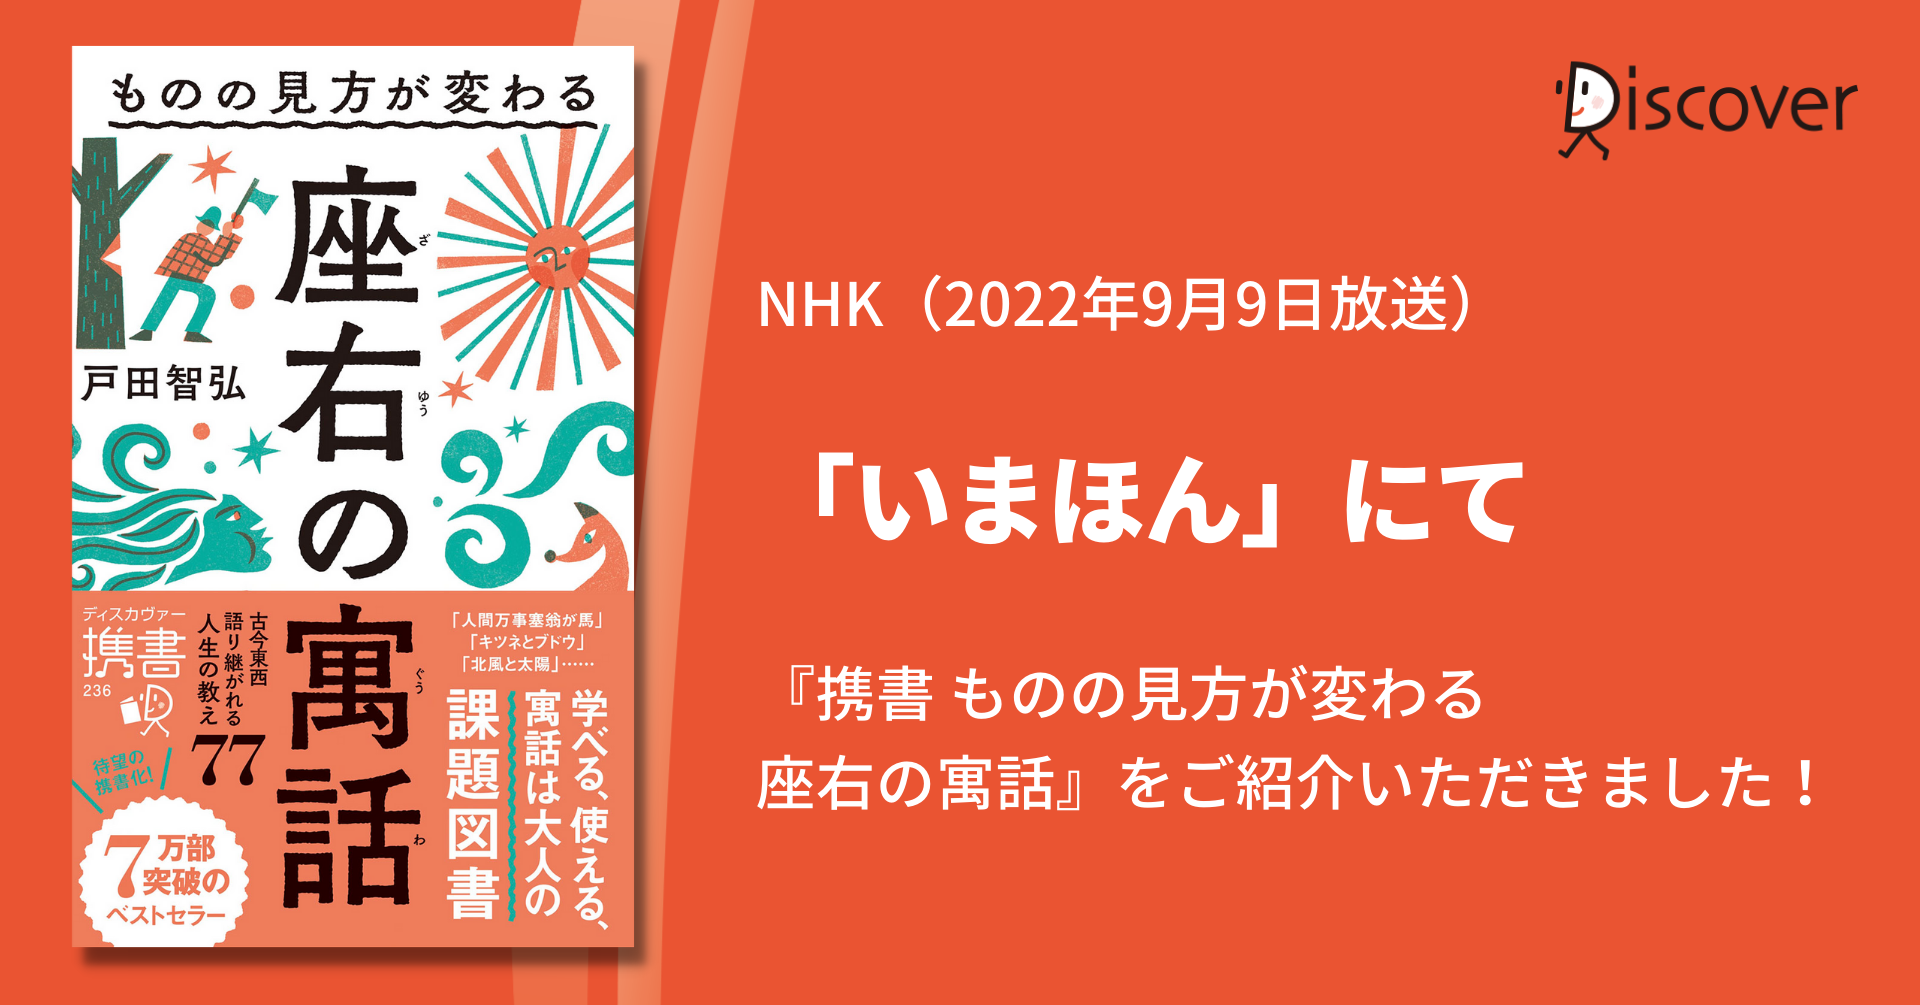 NHK「いまほん」にて『携書 ものの見方が変わる 座右の寓話』をご紹介いただきました！